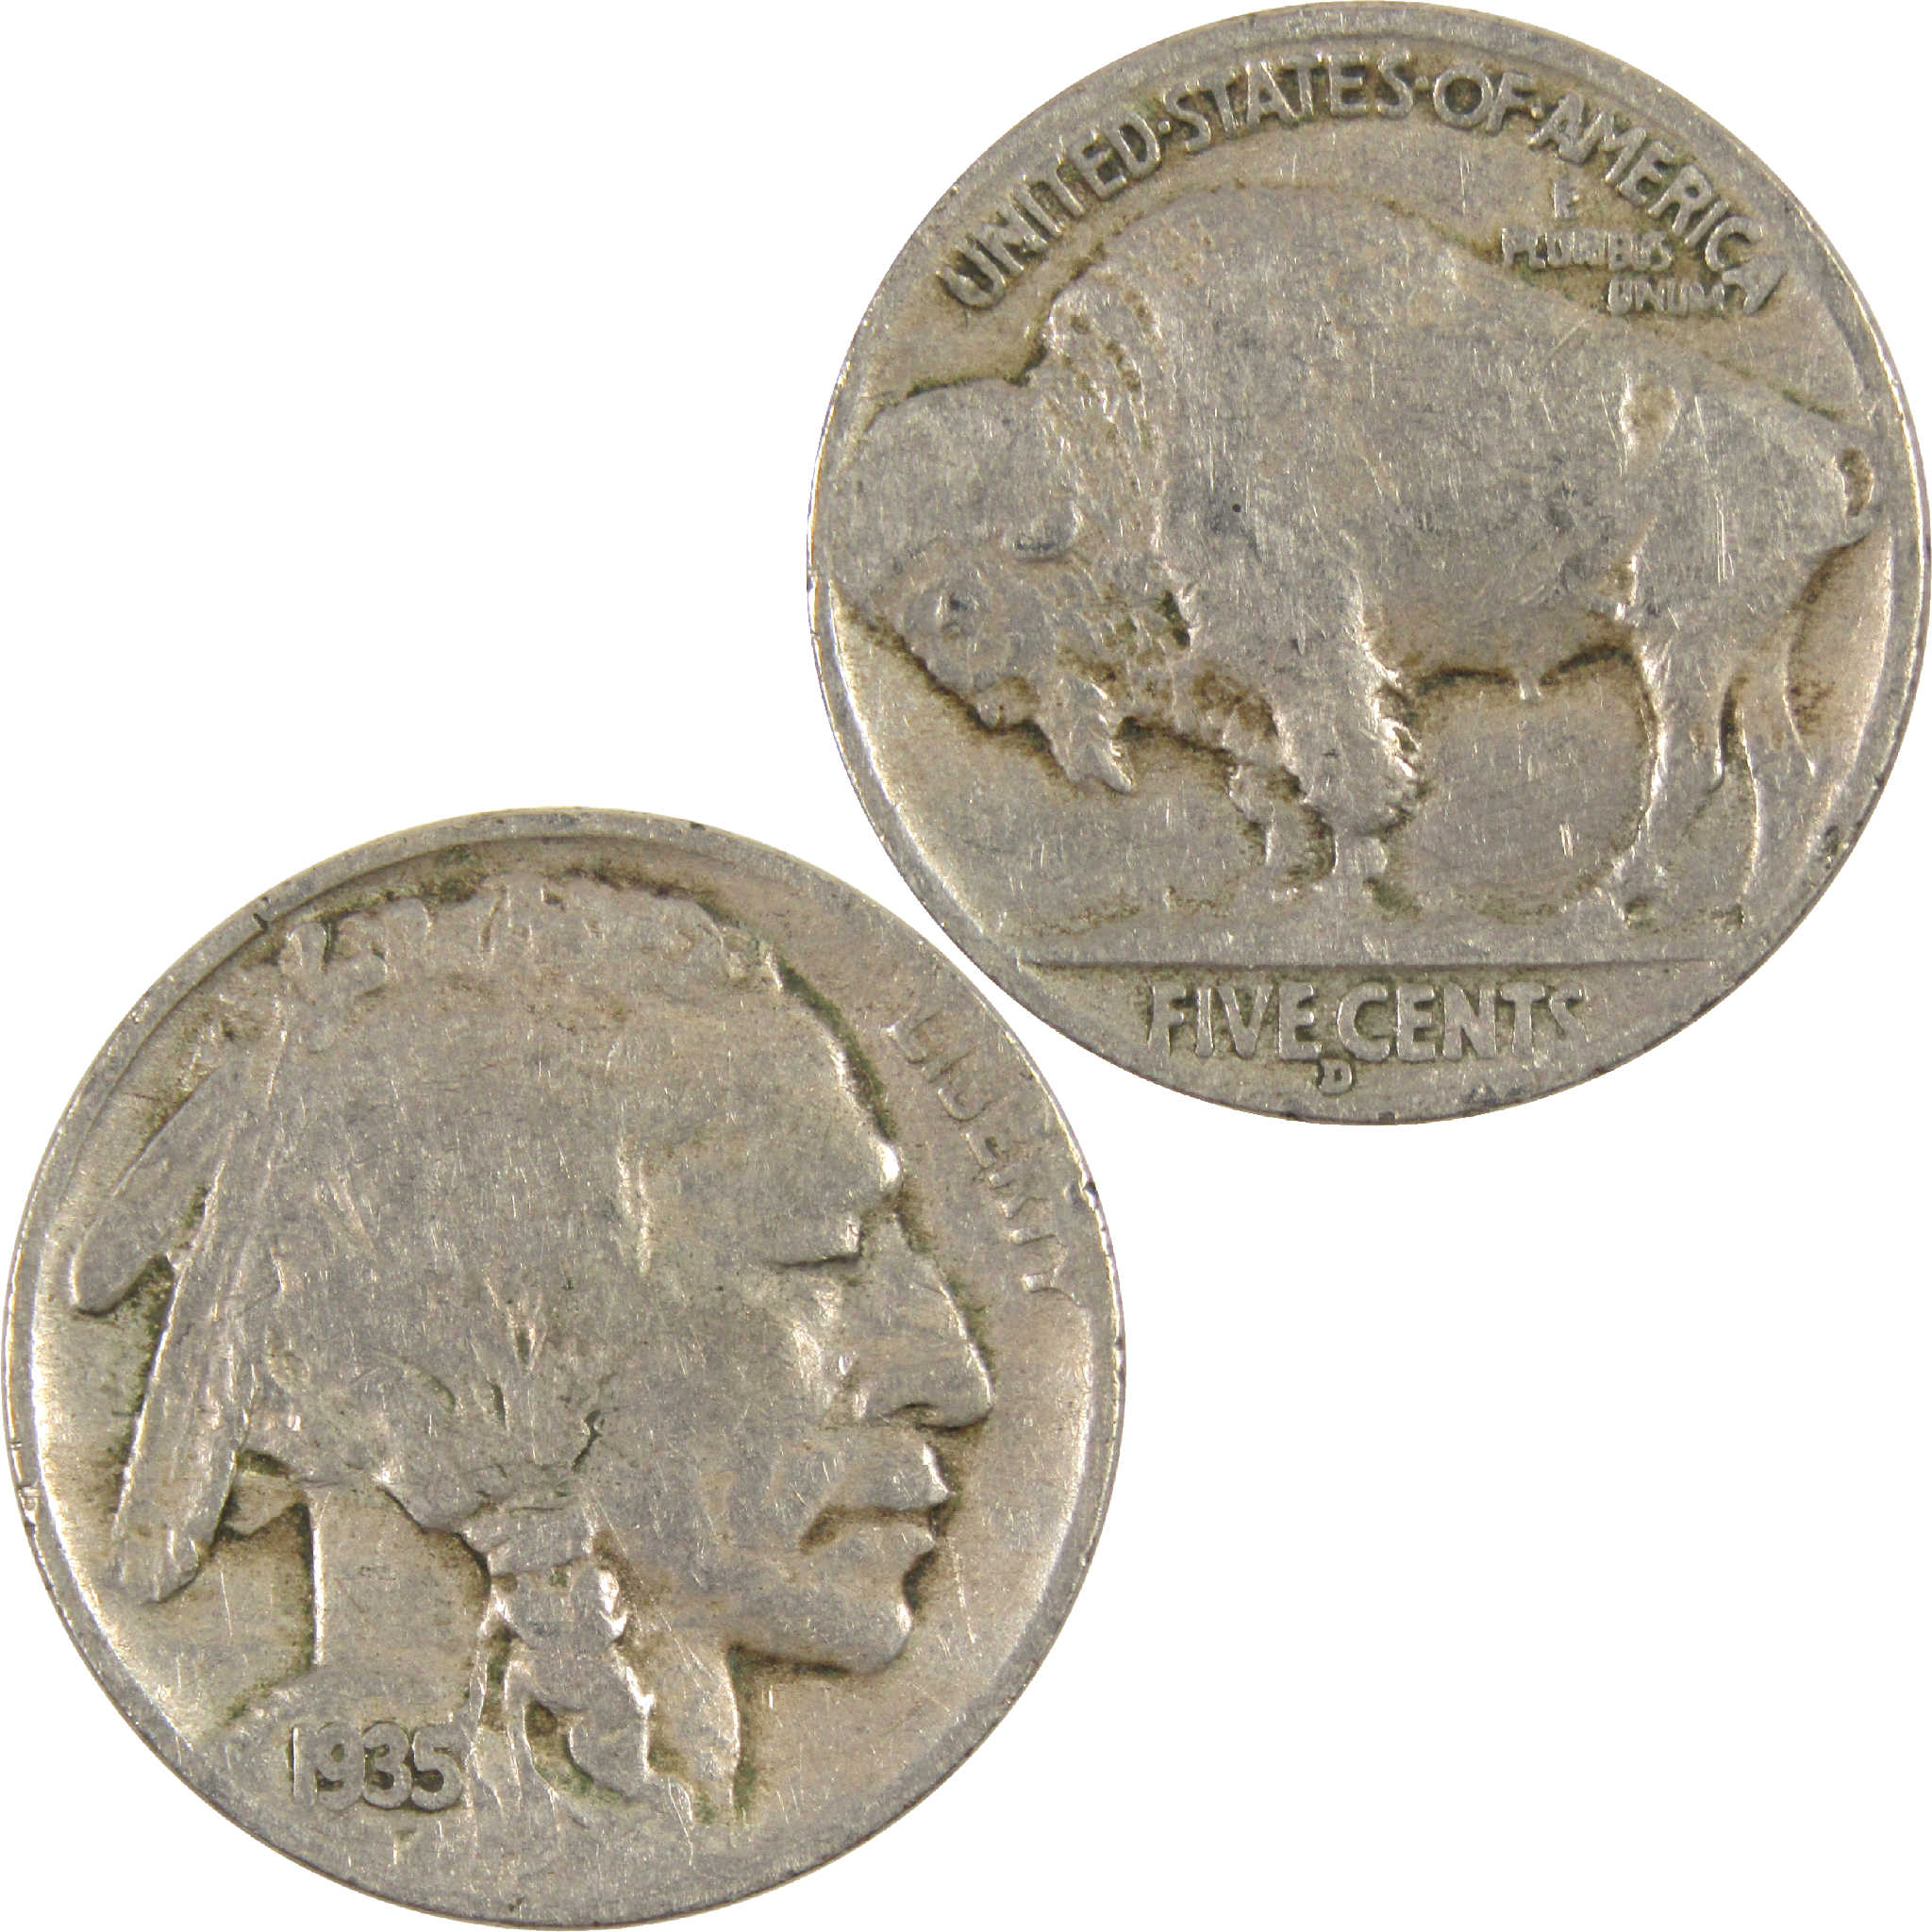 1935 D Indian Head Buffalo Nickel VG Very Good 5c Coin